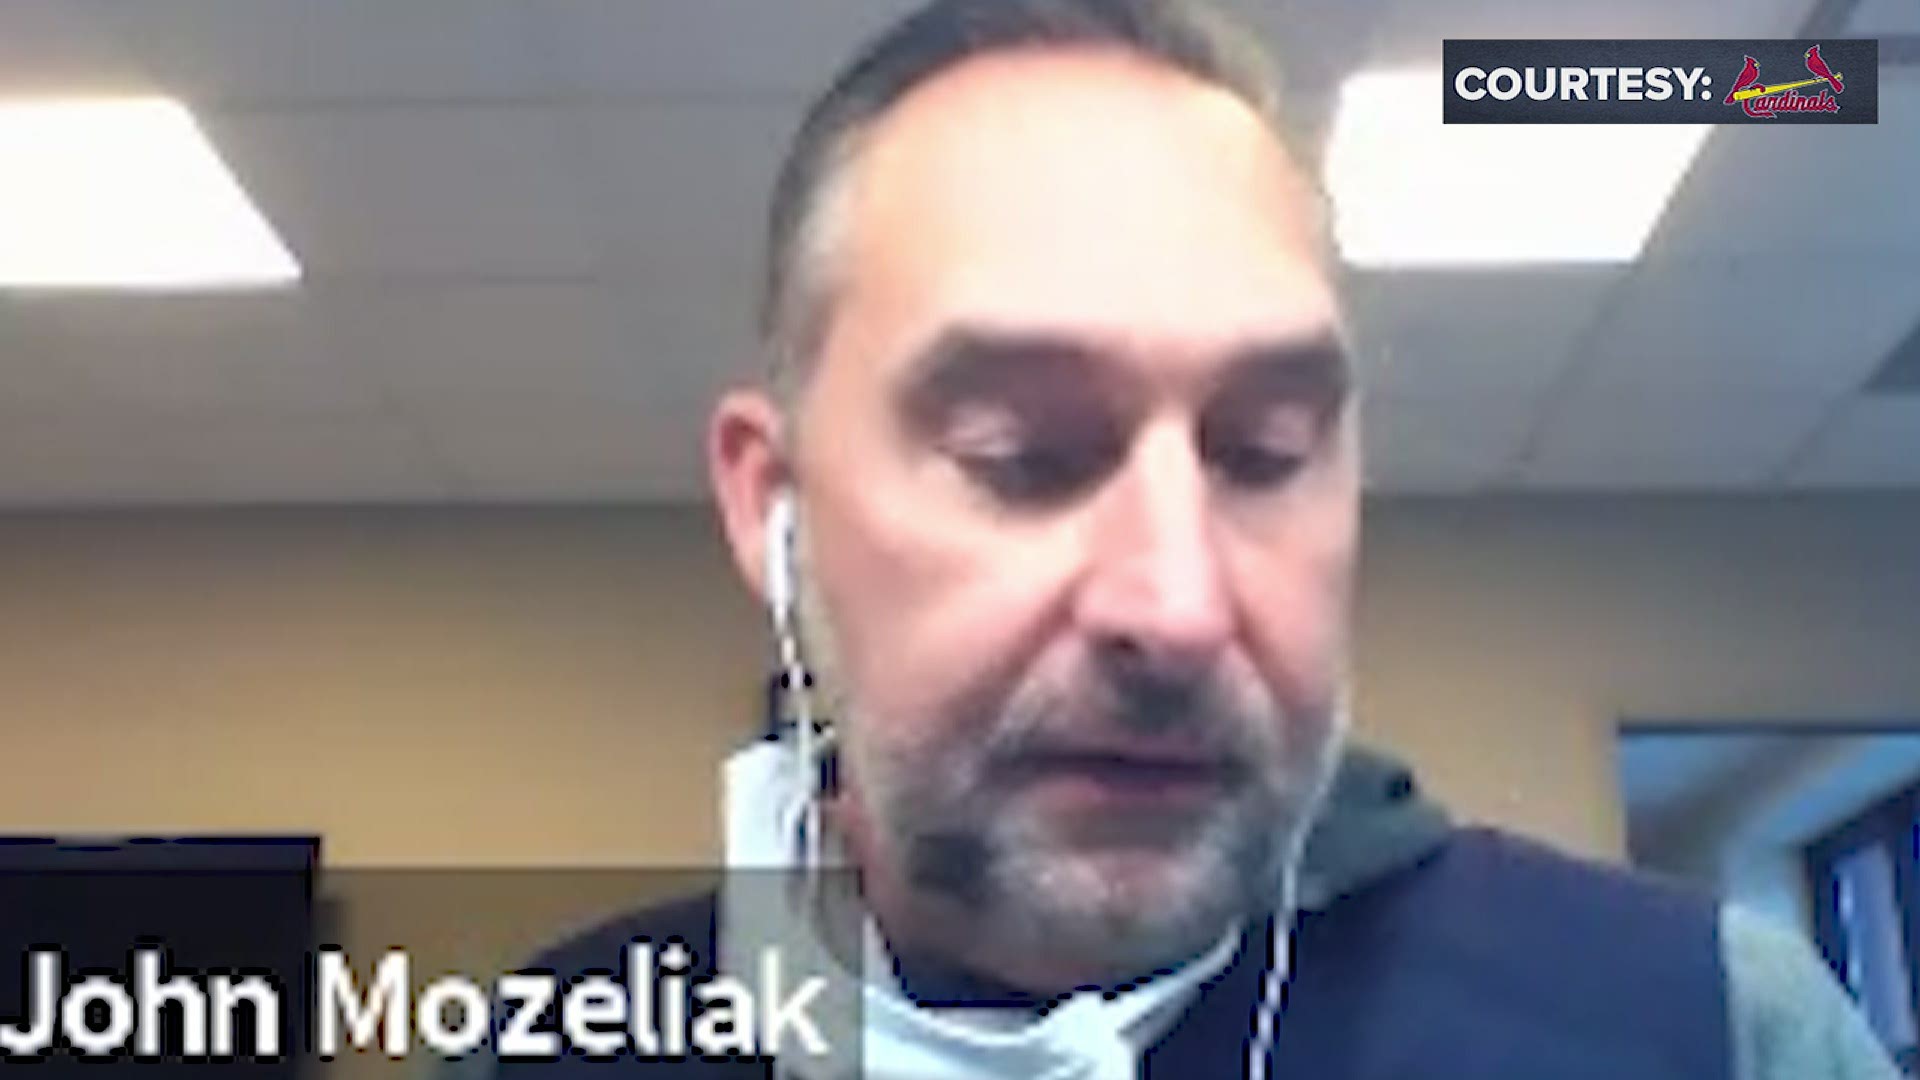 Cardinals, Mozeliak talks Arozarena trade, break out with Rays